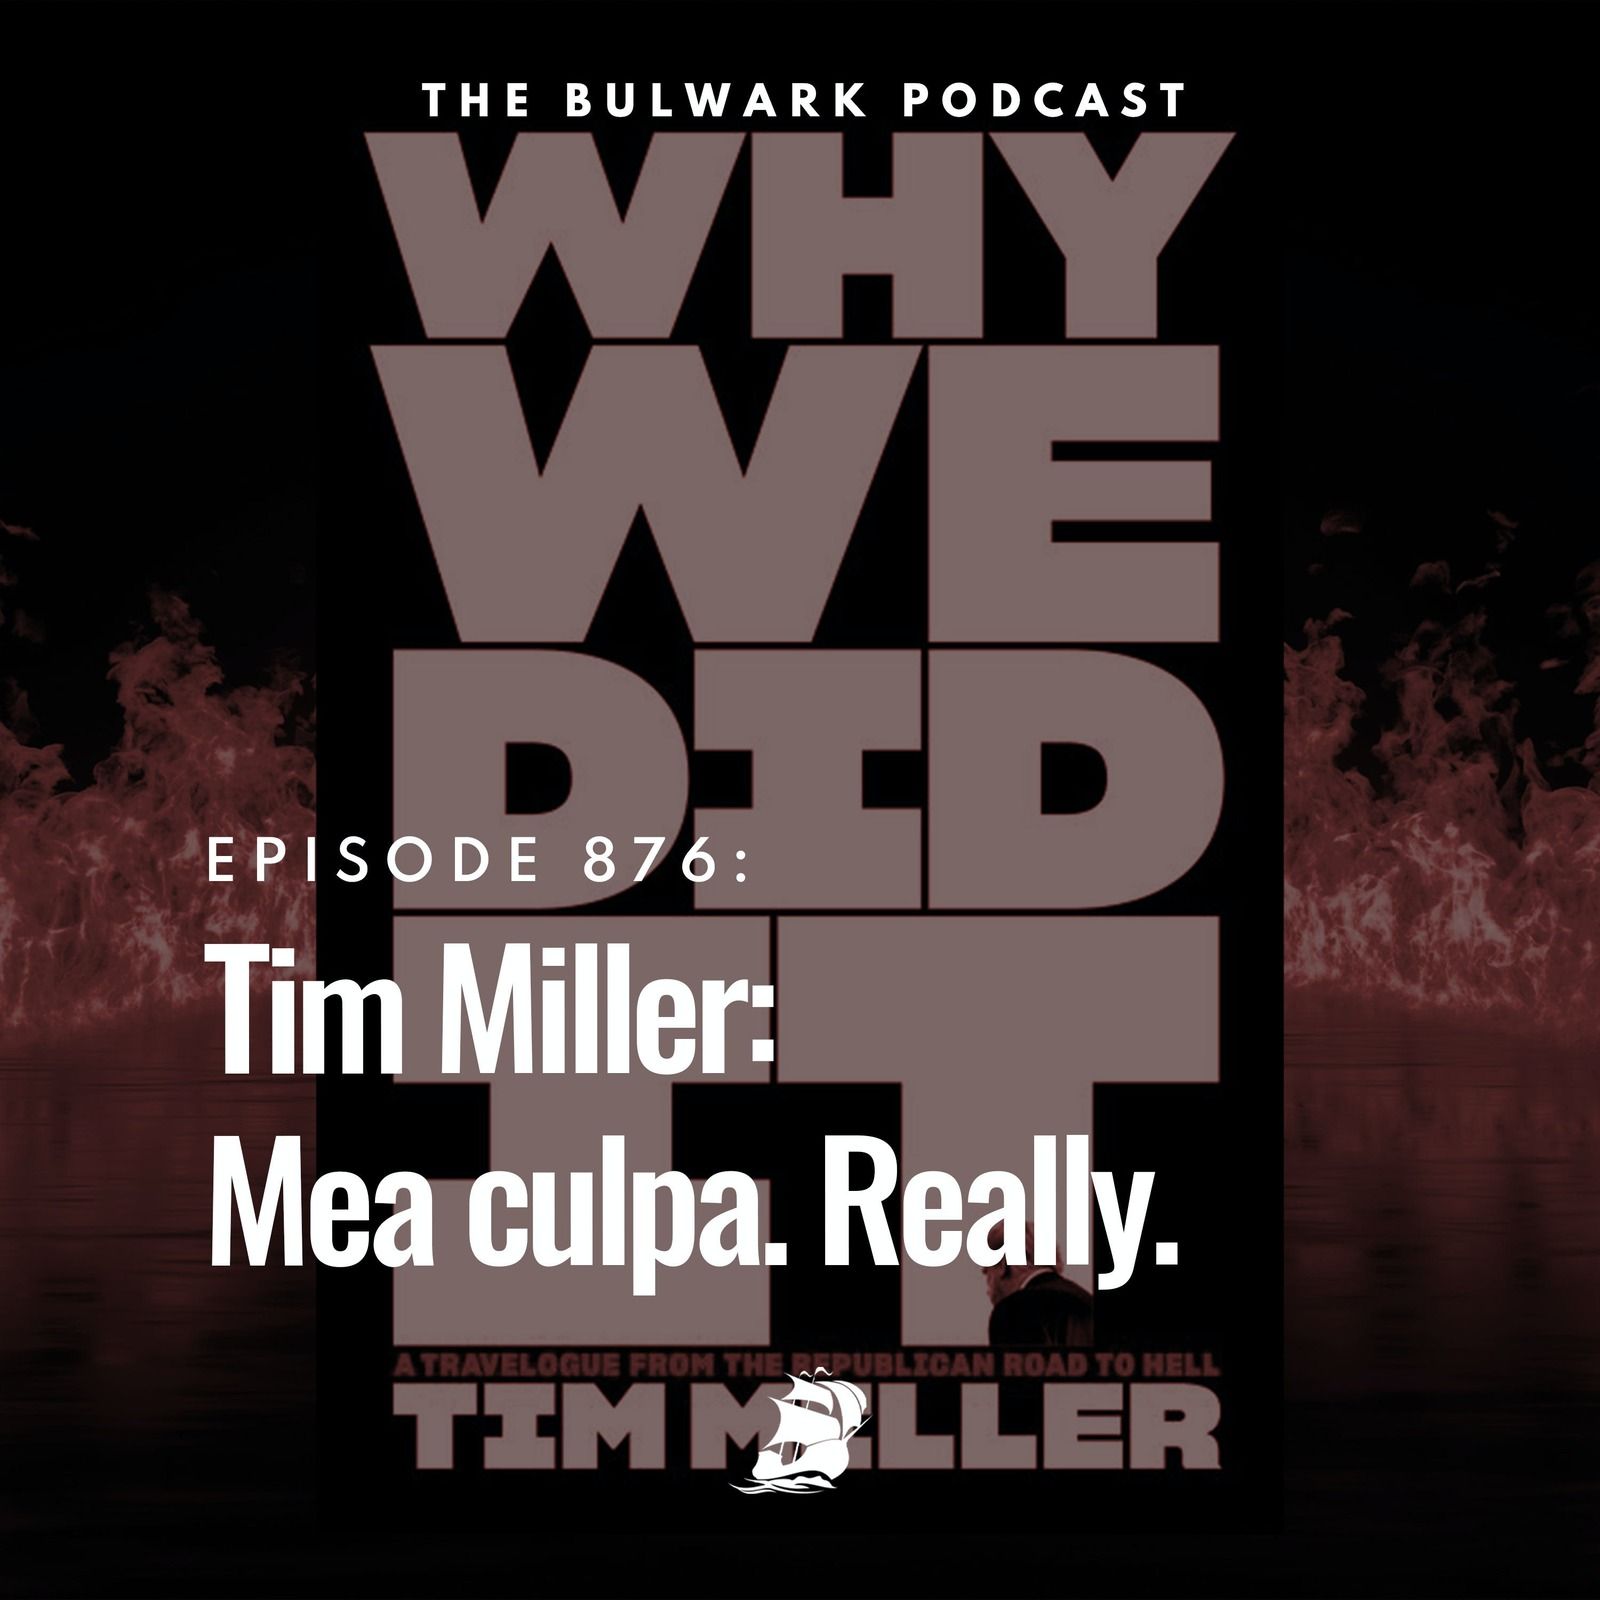 Tim Miller: Mea culpa. Really.